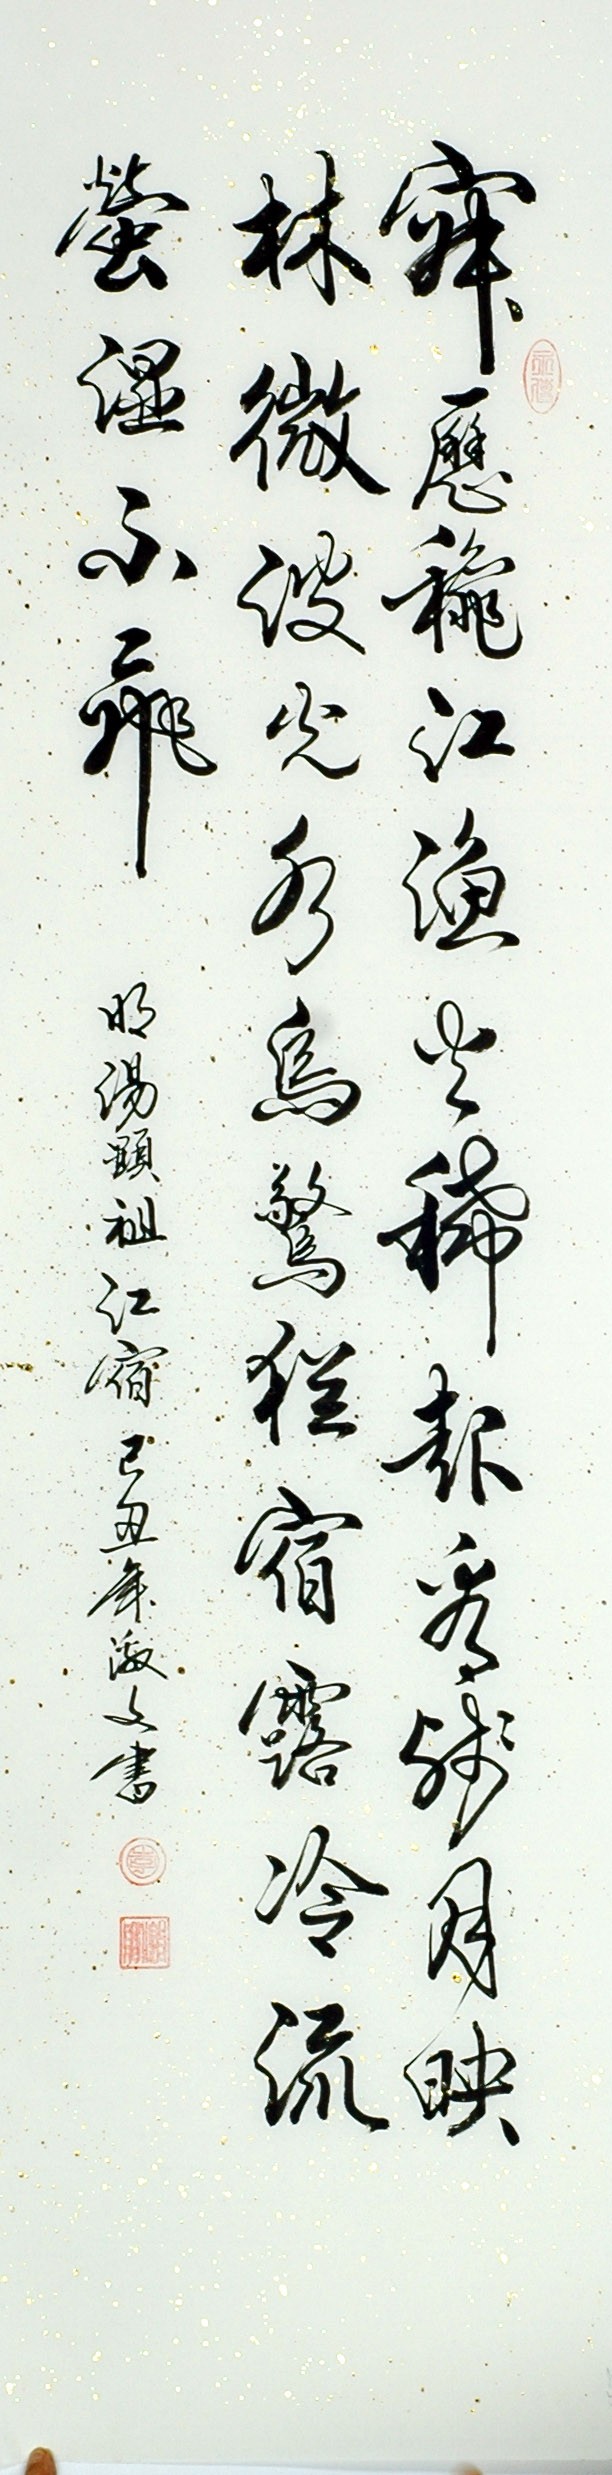 Chinese Cursive Scripts Painting - CNAG011039